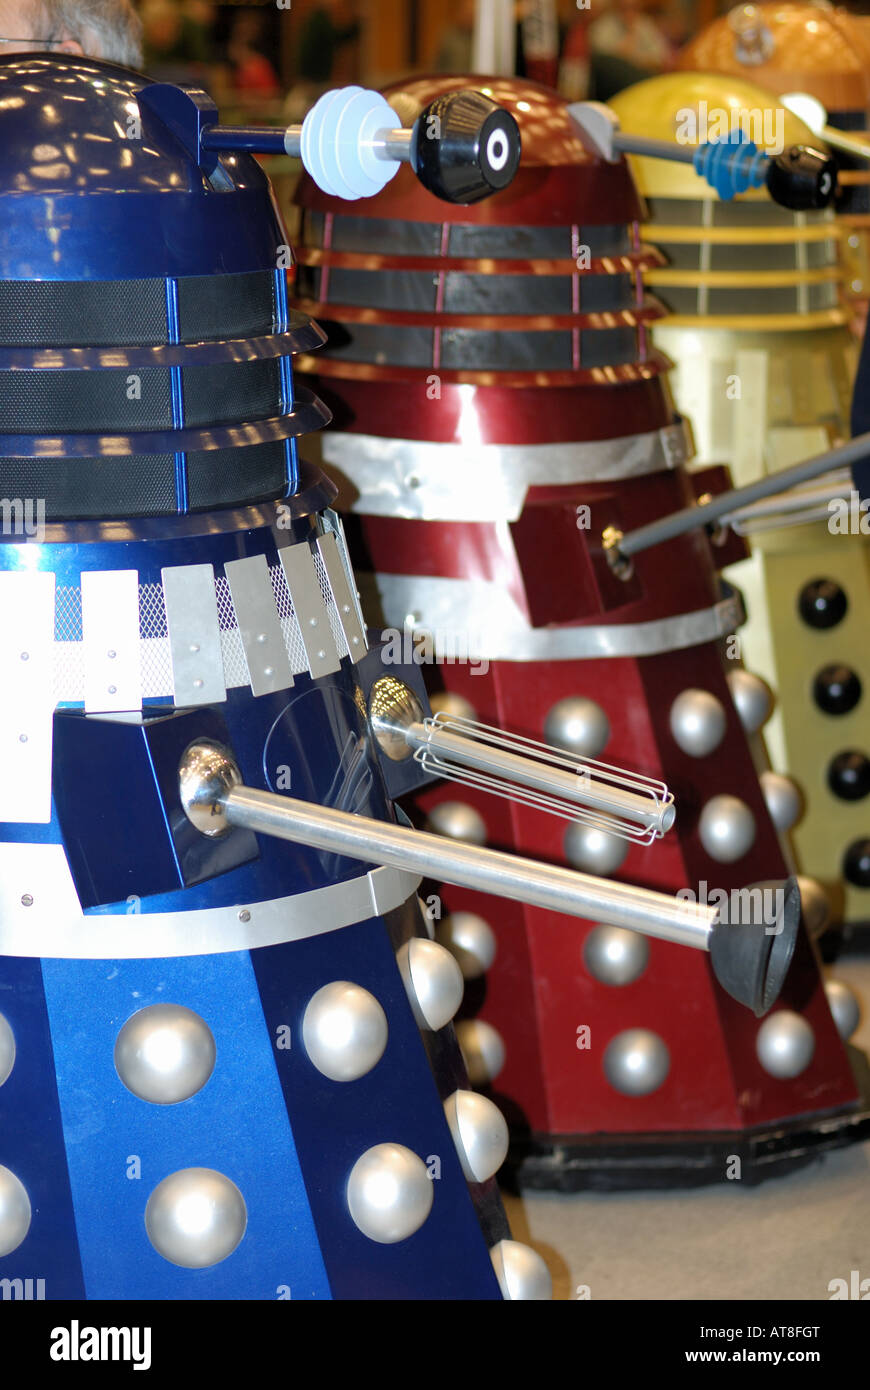 Dalek at toy fair Stock Photo